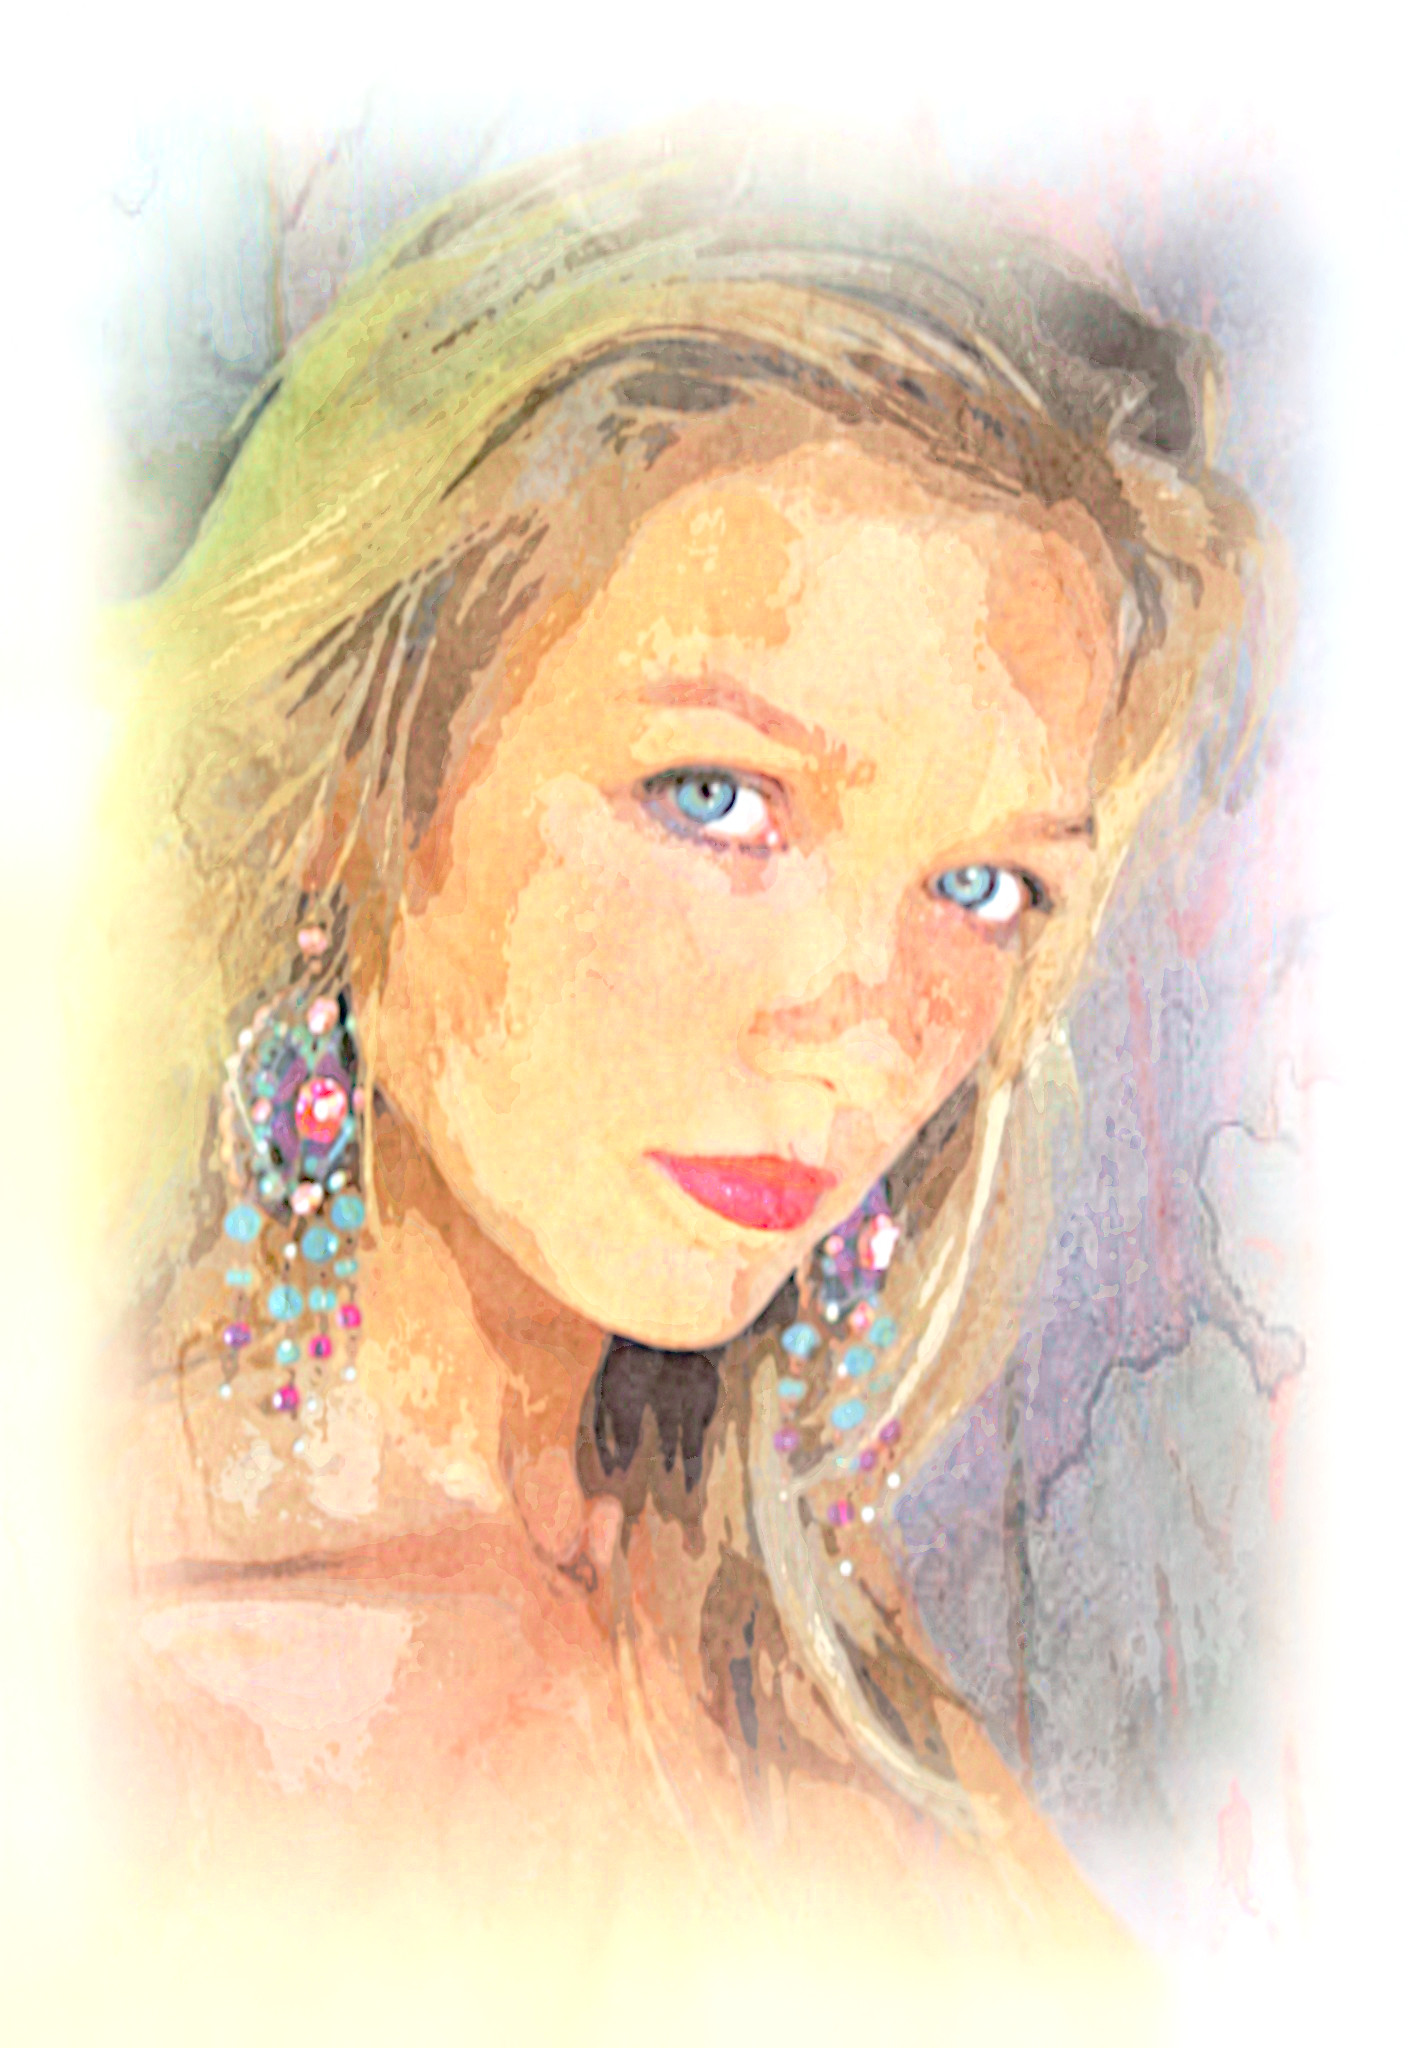 2020-03-30 08-11-00 girl-2306831_1920 as a digital aquarel, using24 colours, source portrait, look delicate plus.jpg